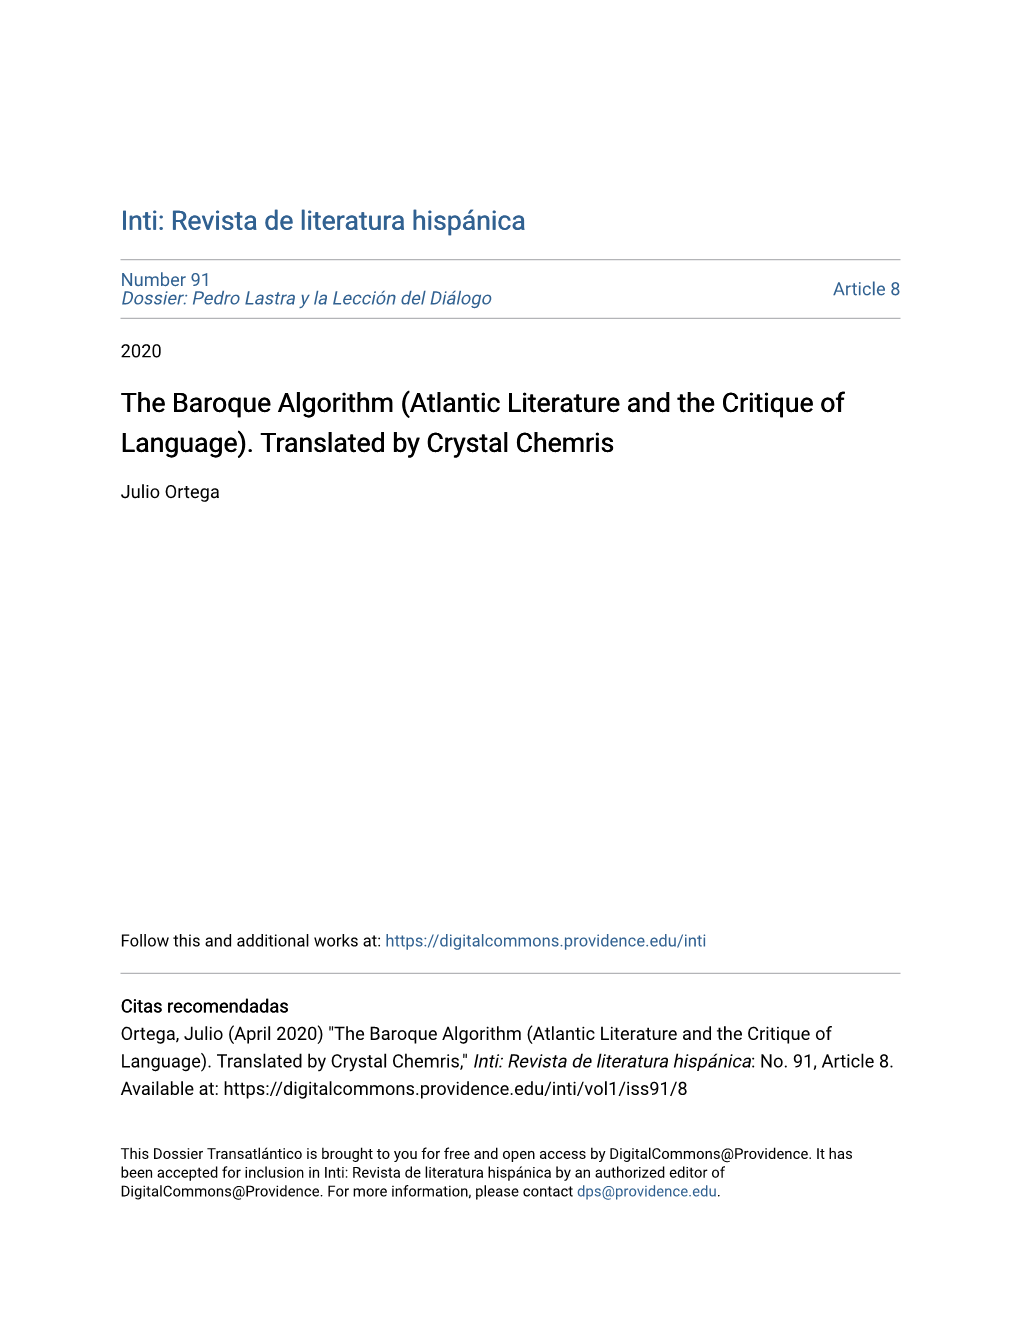 The Baroque Algorithm (Atlantic Literature and the Critique of Language)